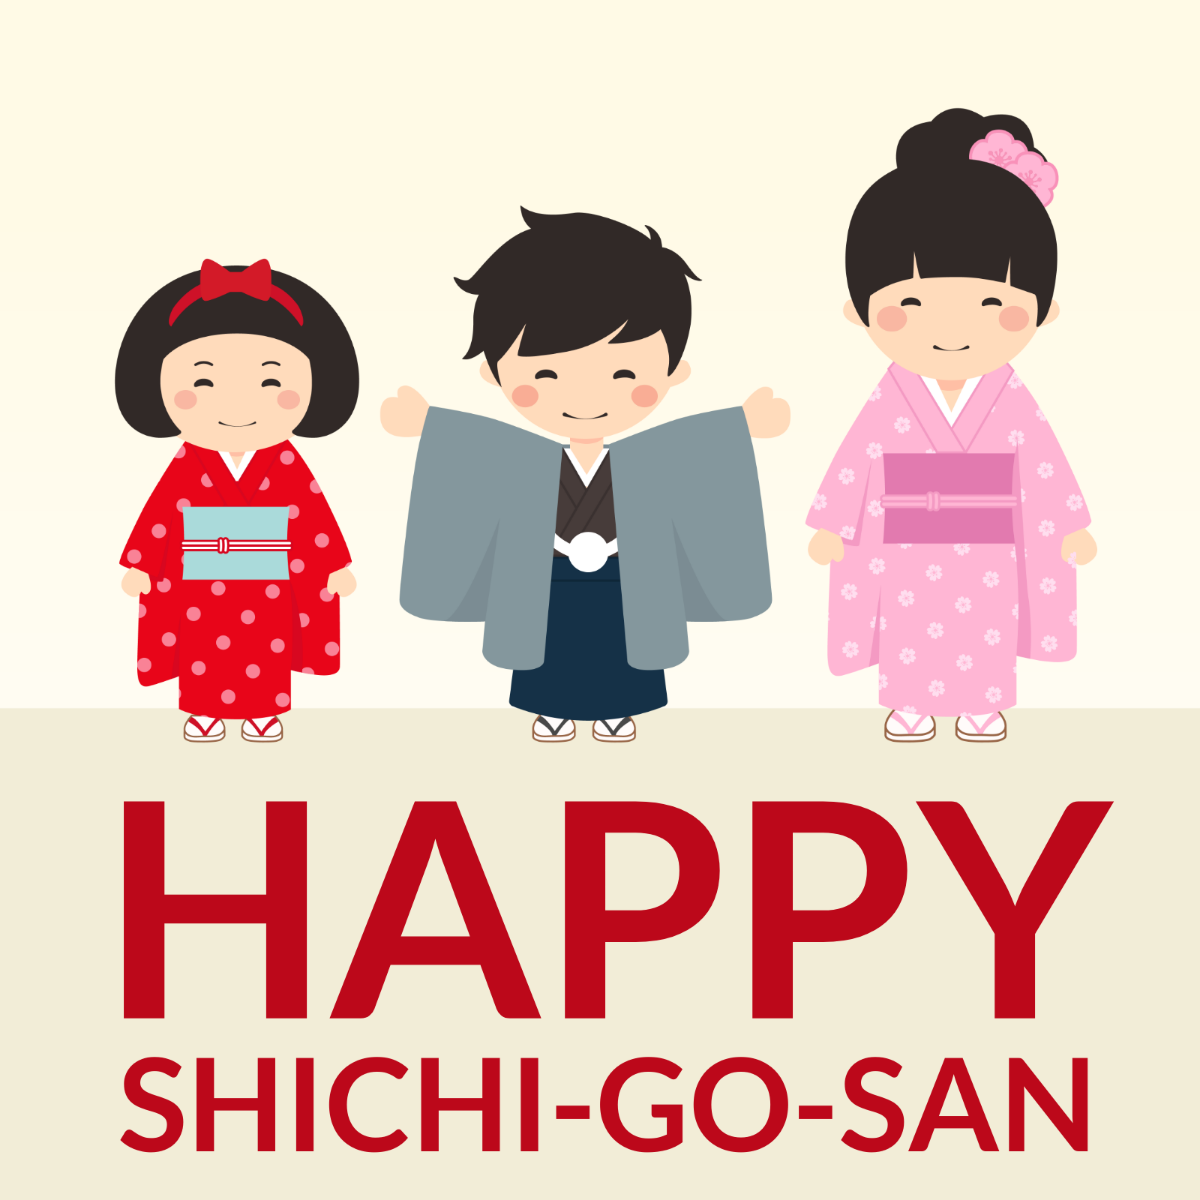 Free Shichi-Go-San WhatsApp Post Template